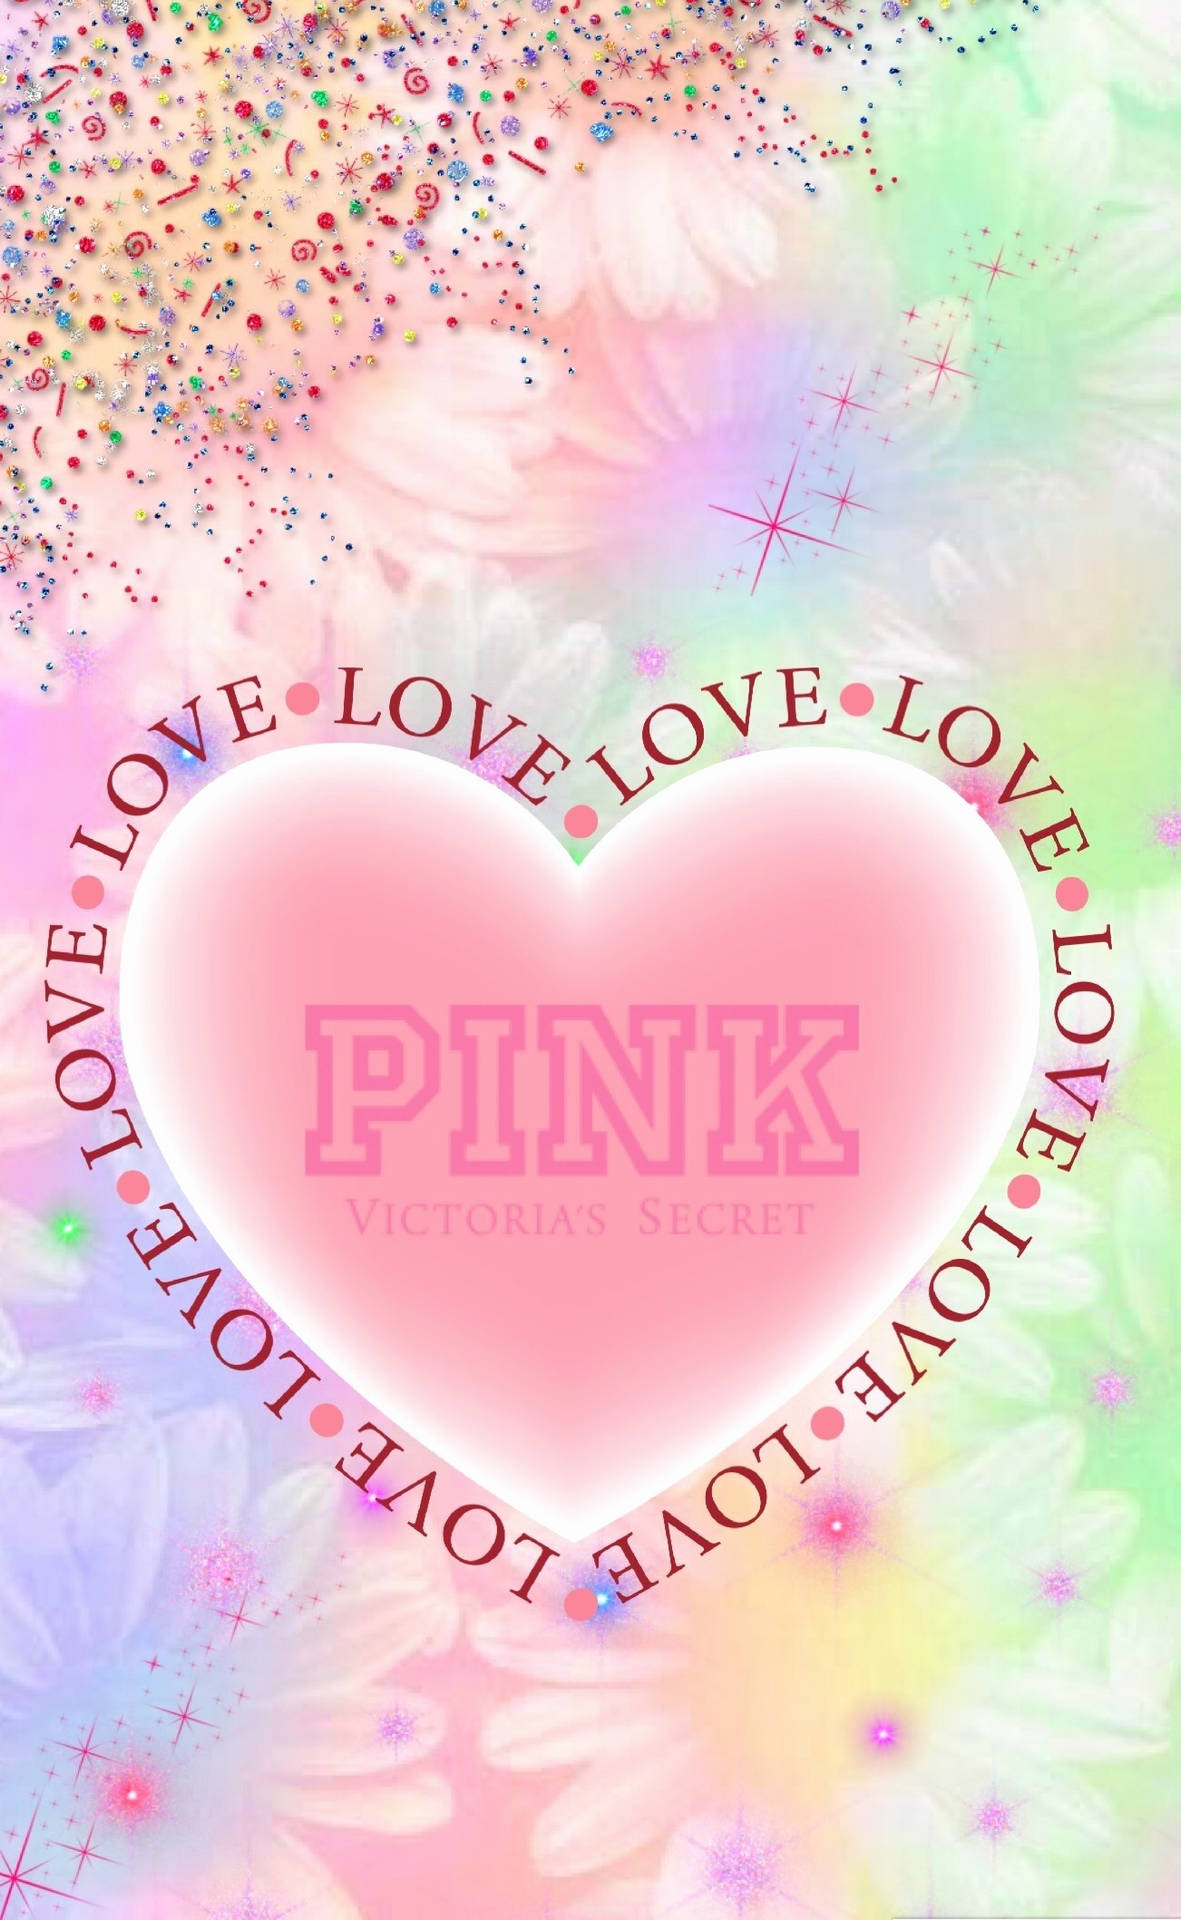 Victoria's Secret Heart Pink Floral